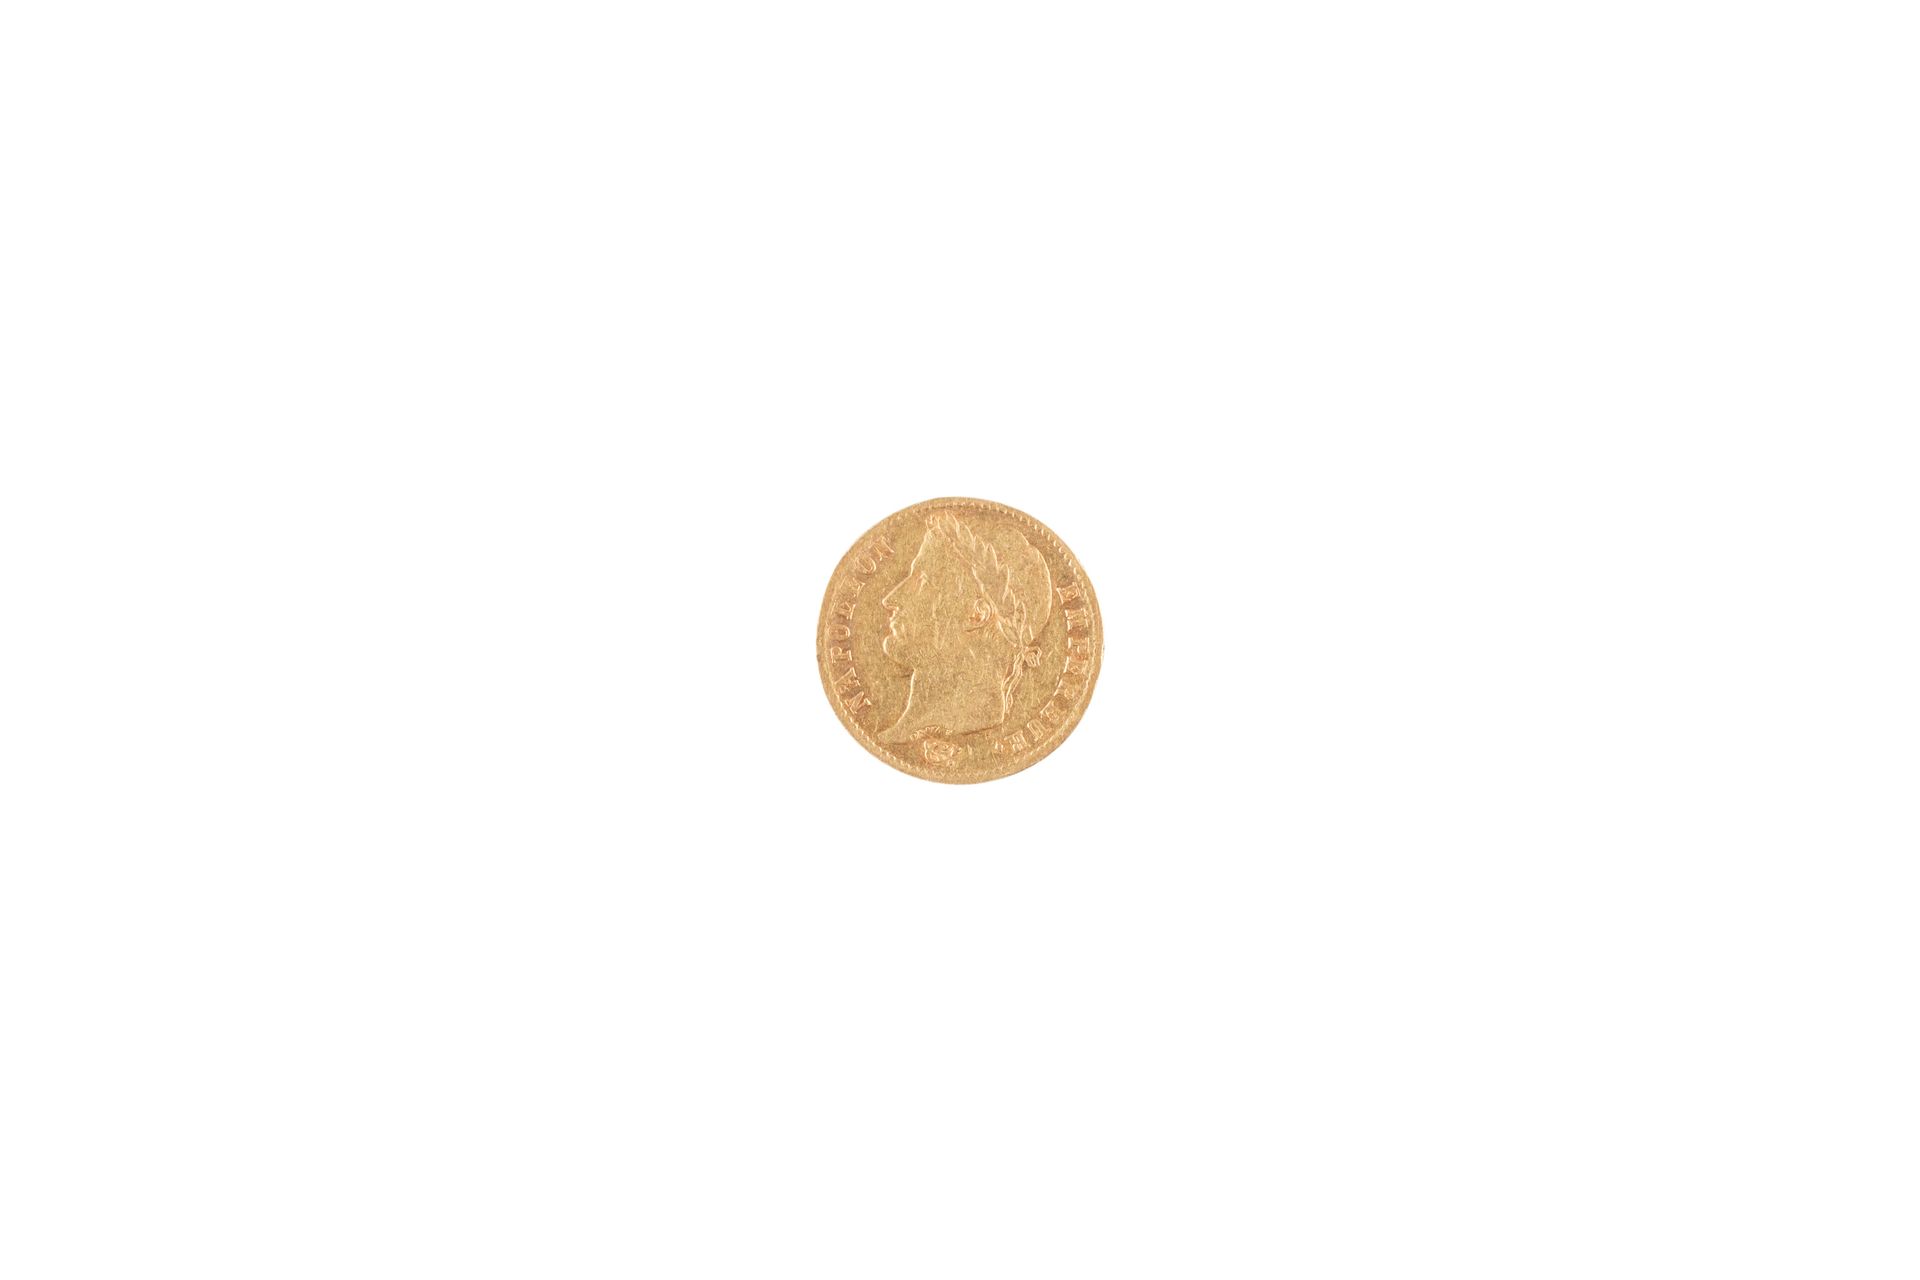 Null 20 francos de oro 1811 A París, 6,41 gr. G. 1025

TTB